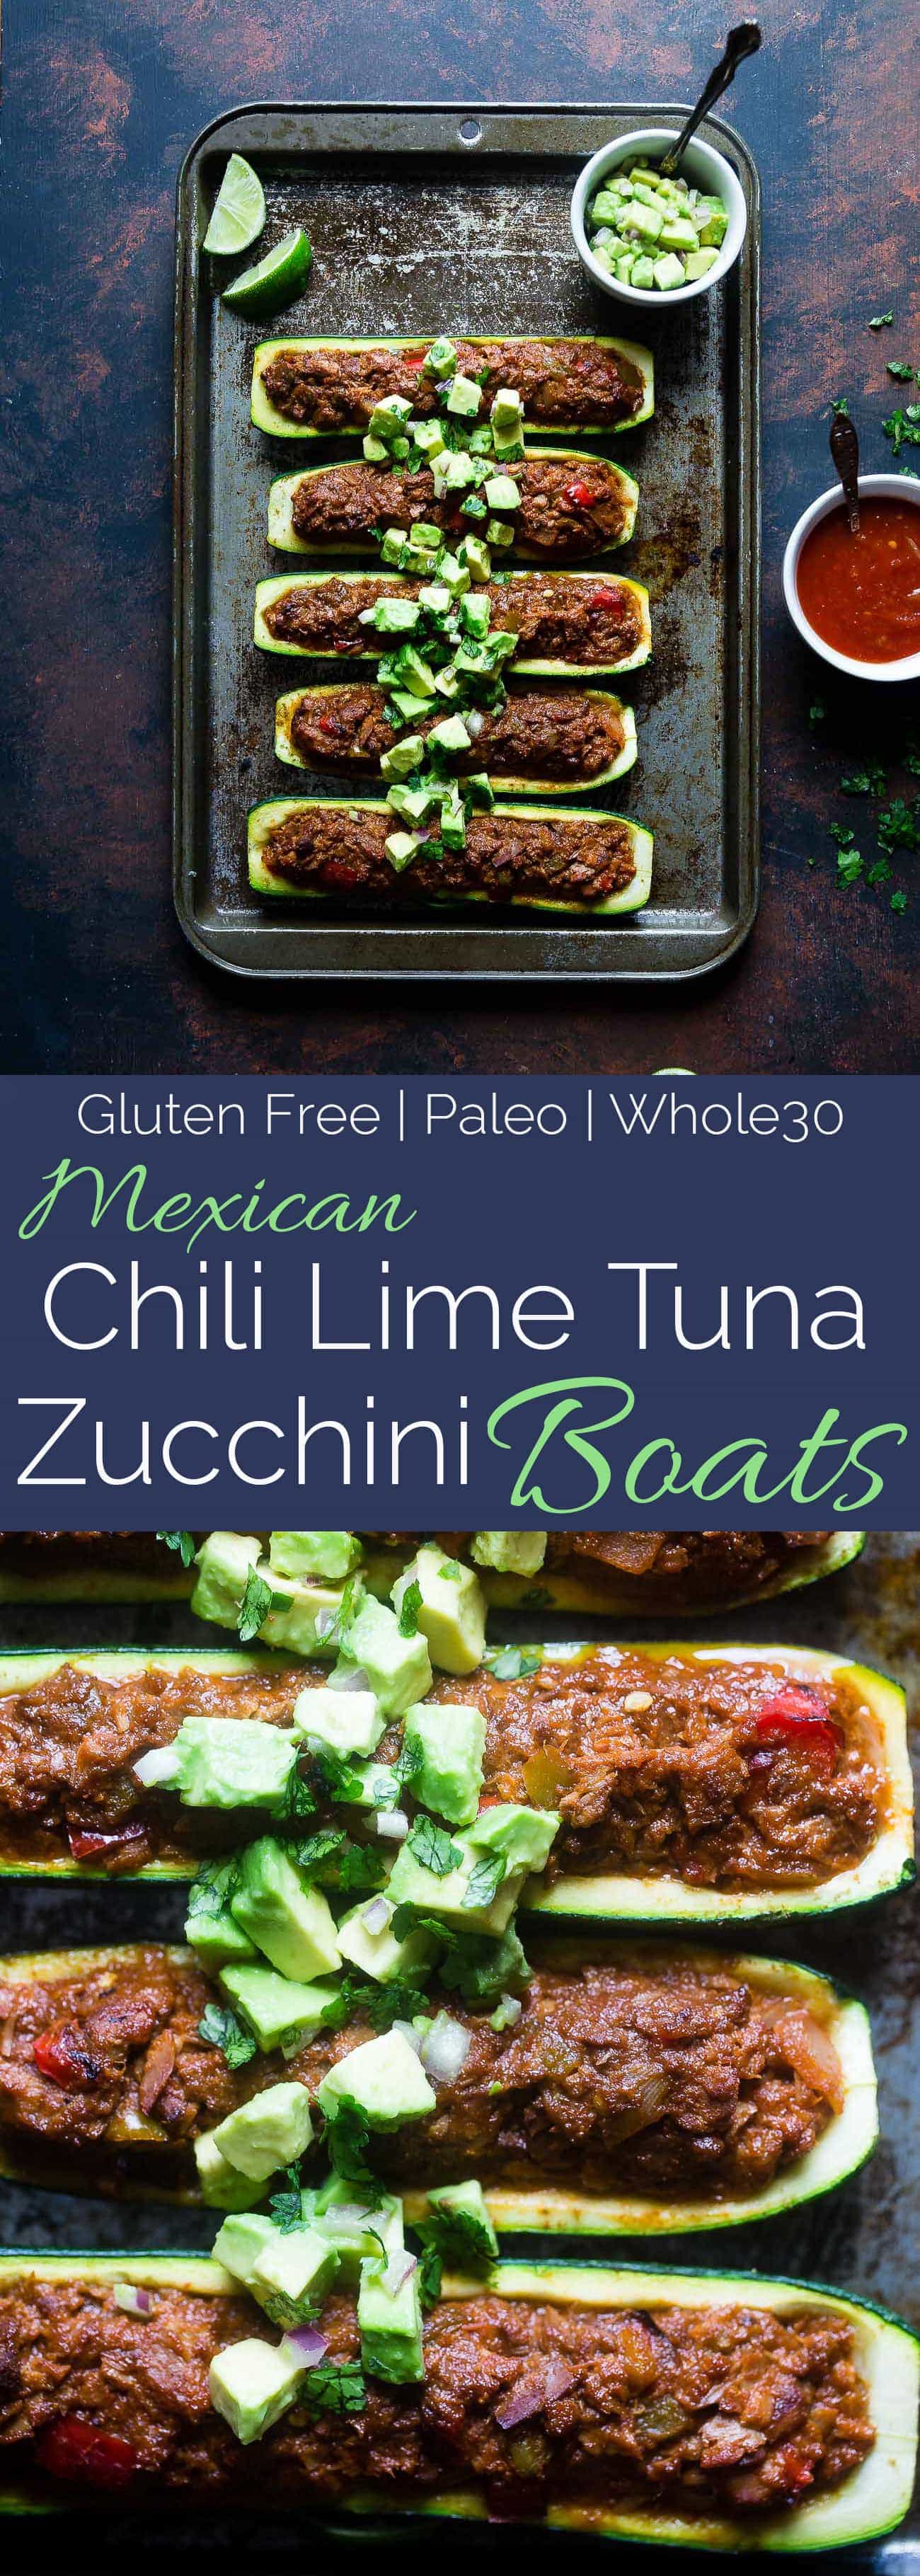 Mexican Tuna Stuffed Zucchini Boats | Food Faith Fitness